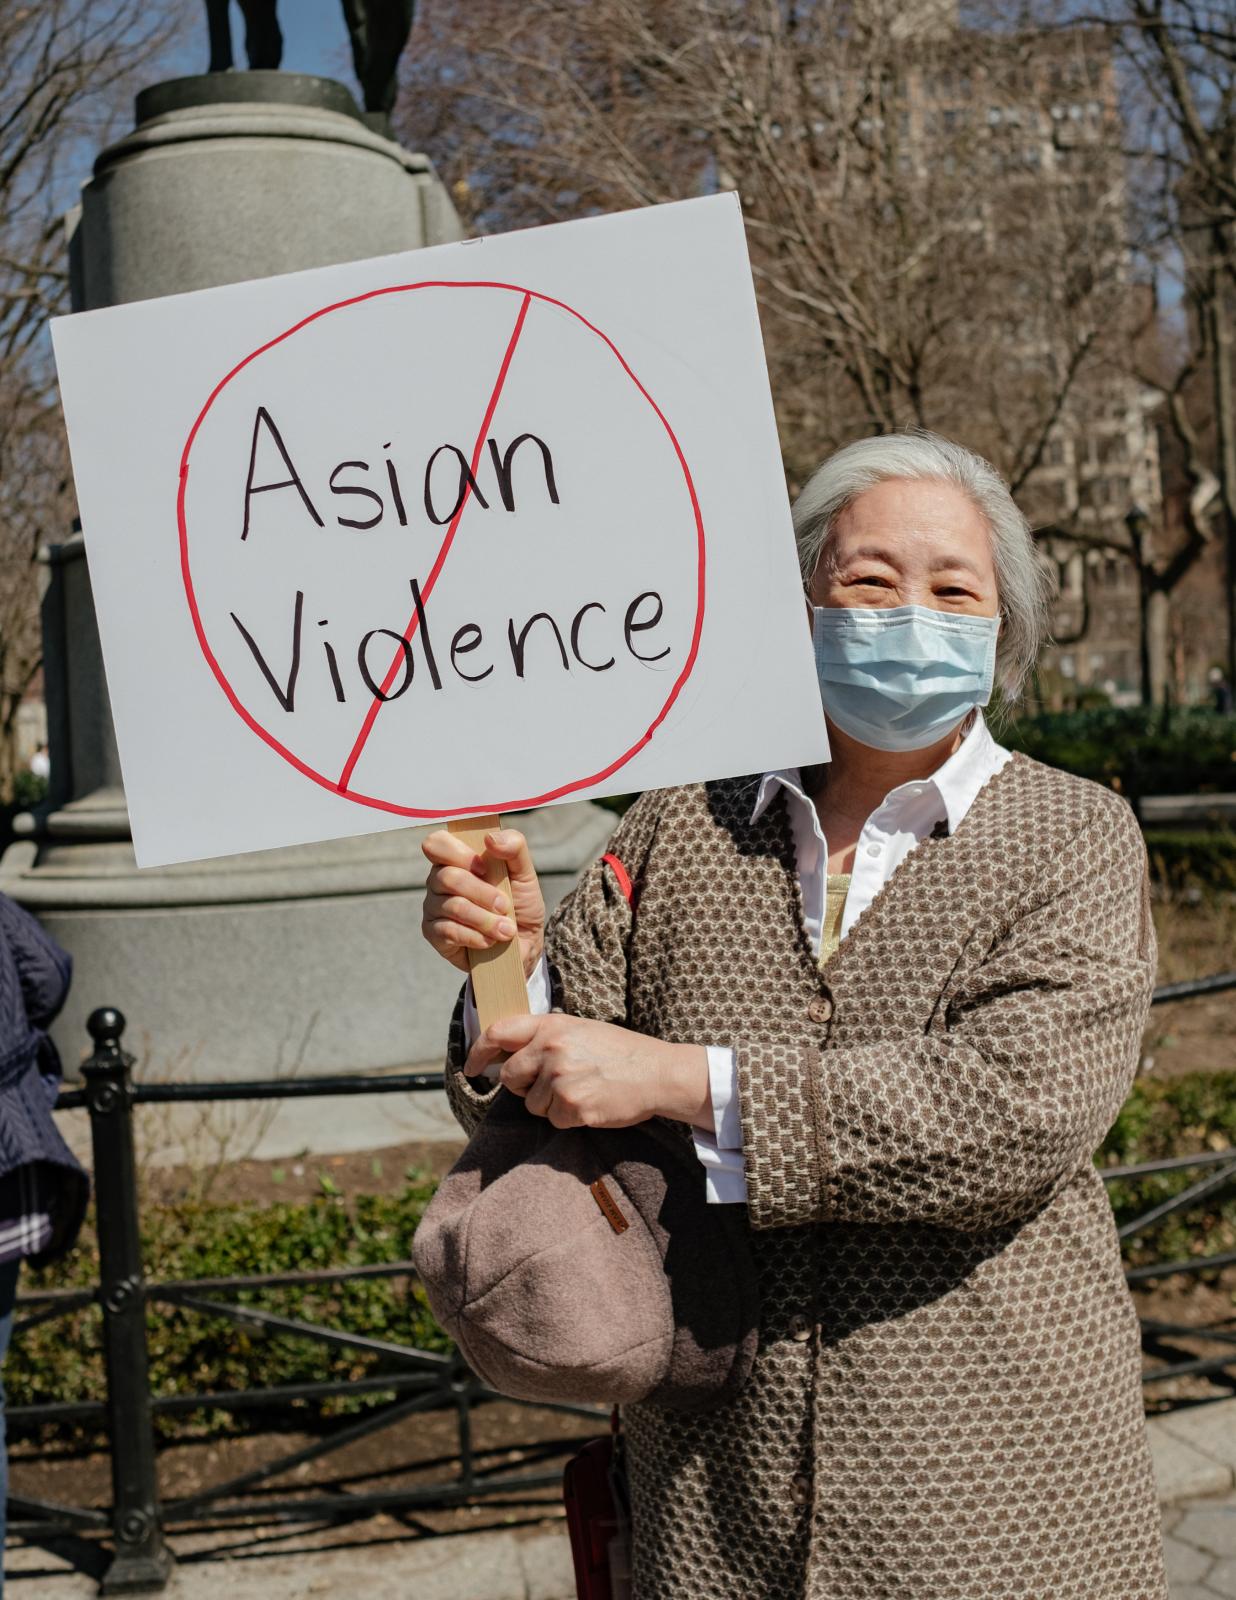 The Cut - A Day of Solidarity Amid Rising Anti-Asian Violence